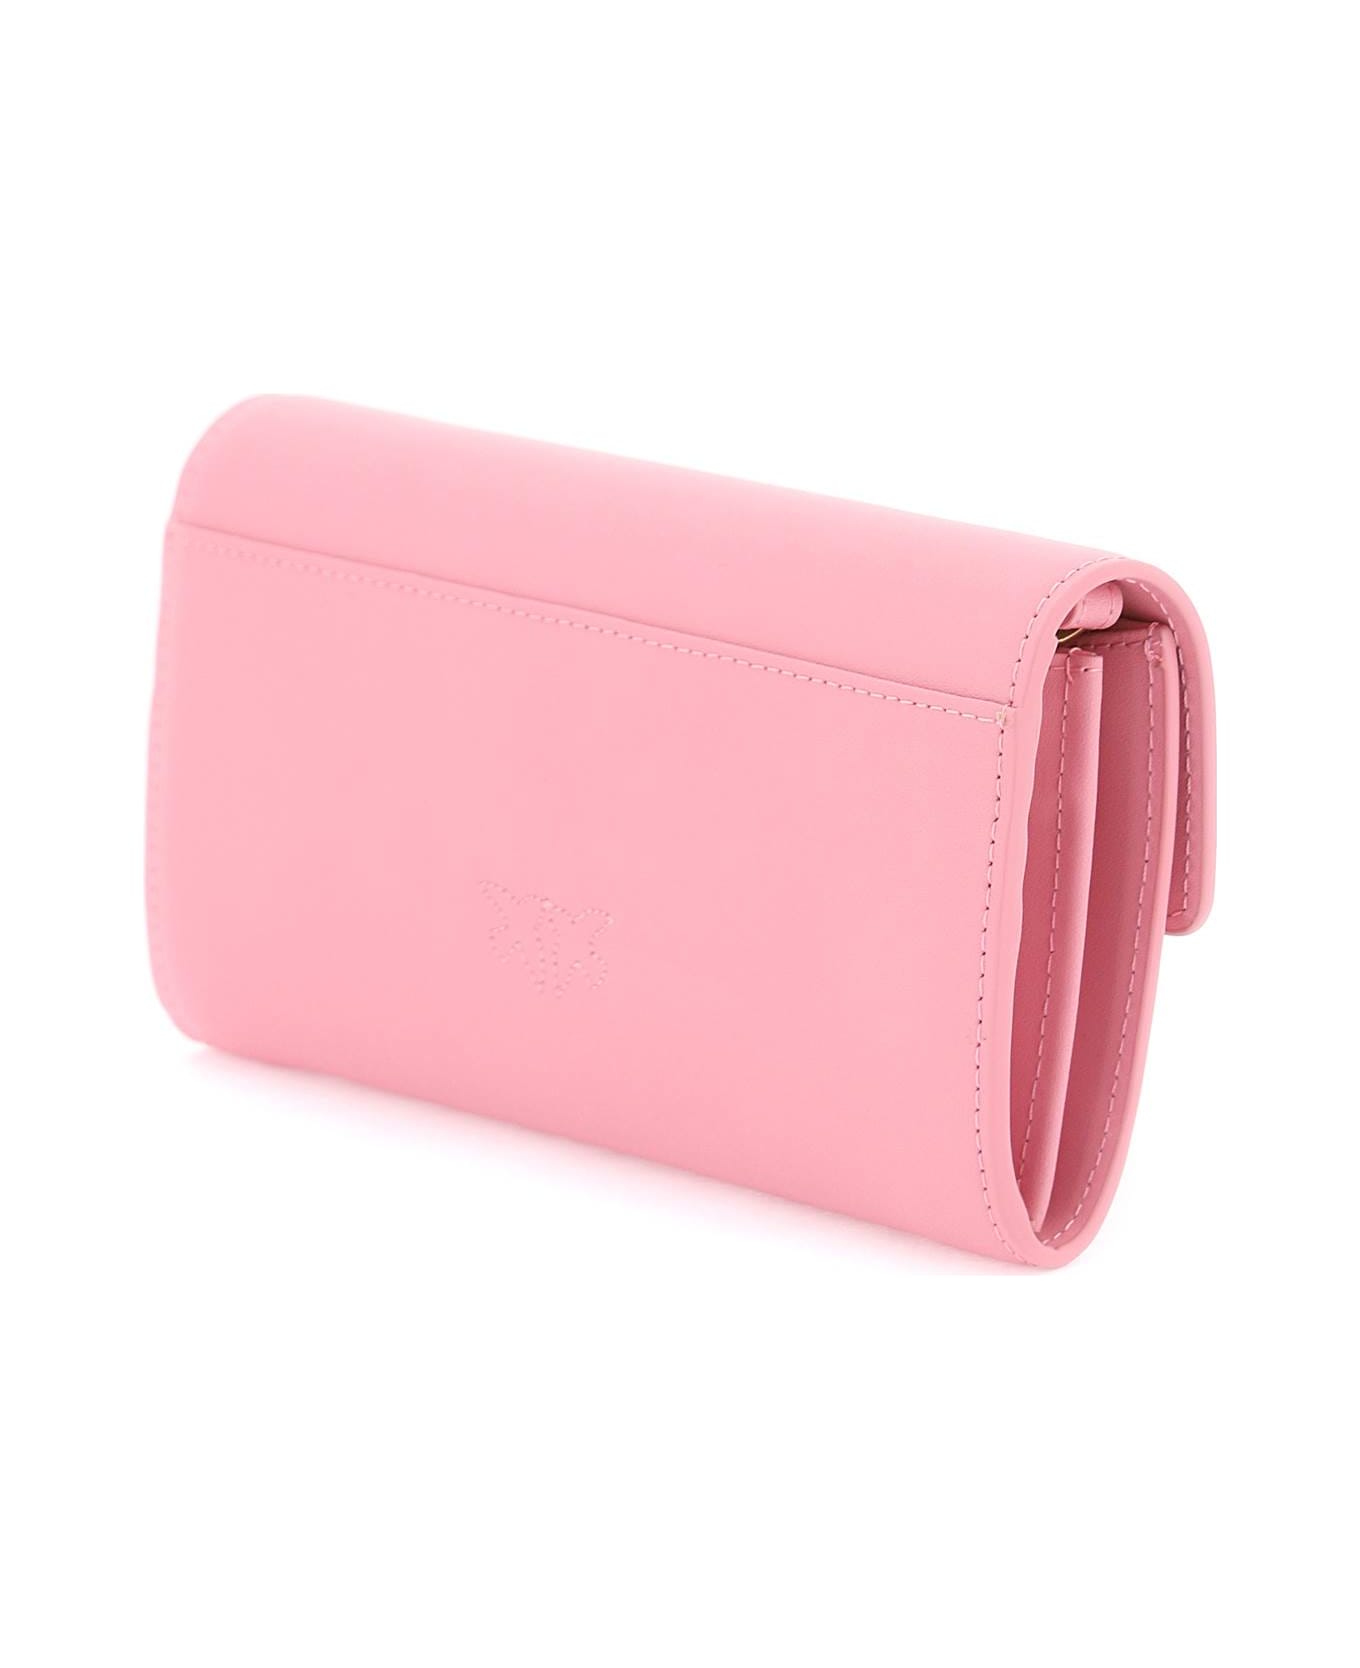 Pinko Love Bag Simply Crossbody Bag - ROSA MARINO ANTIQUE GOLD (Pink)